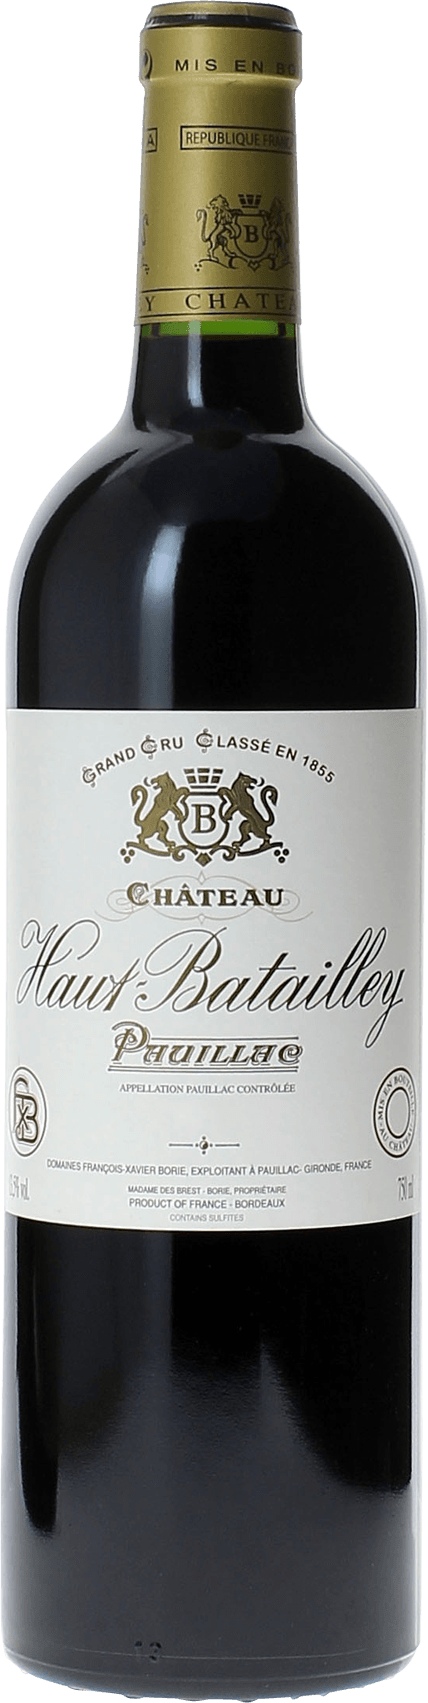 Haut batailley pauillac 1993 5 me Grand cru class Pauillac, Bordeaux rouge